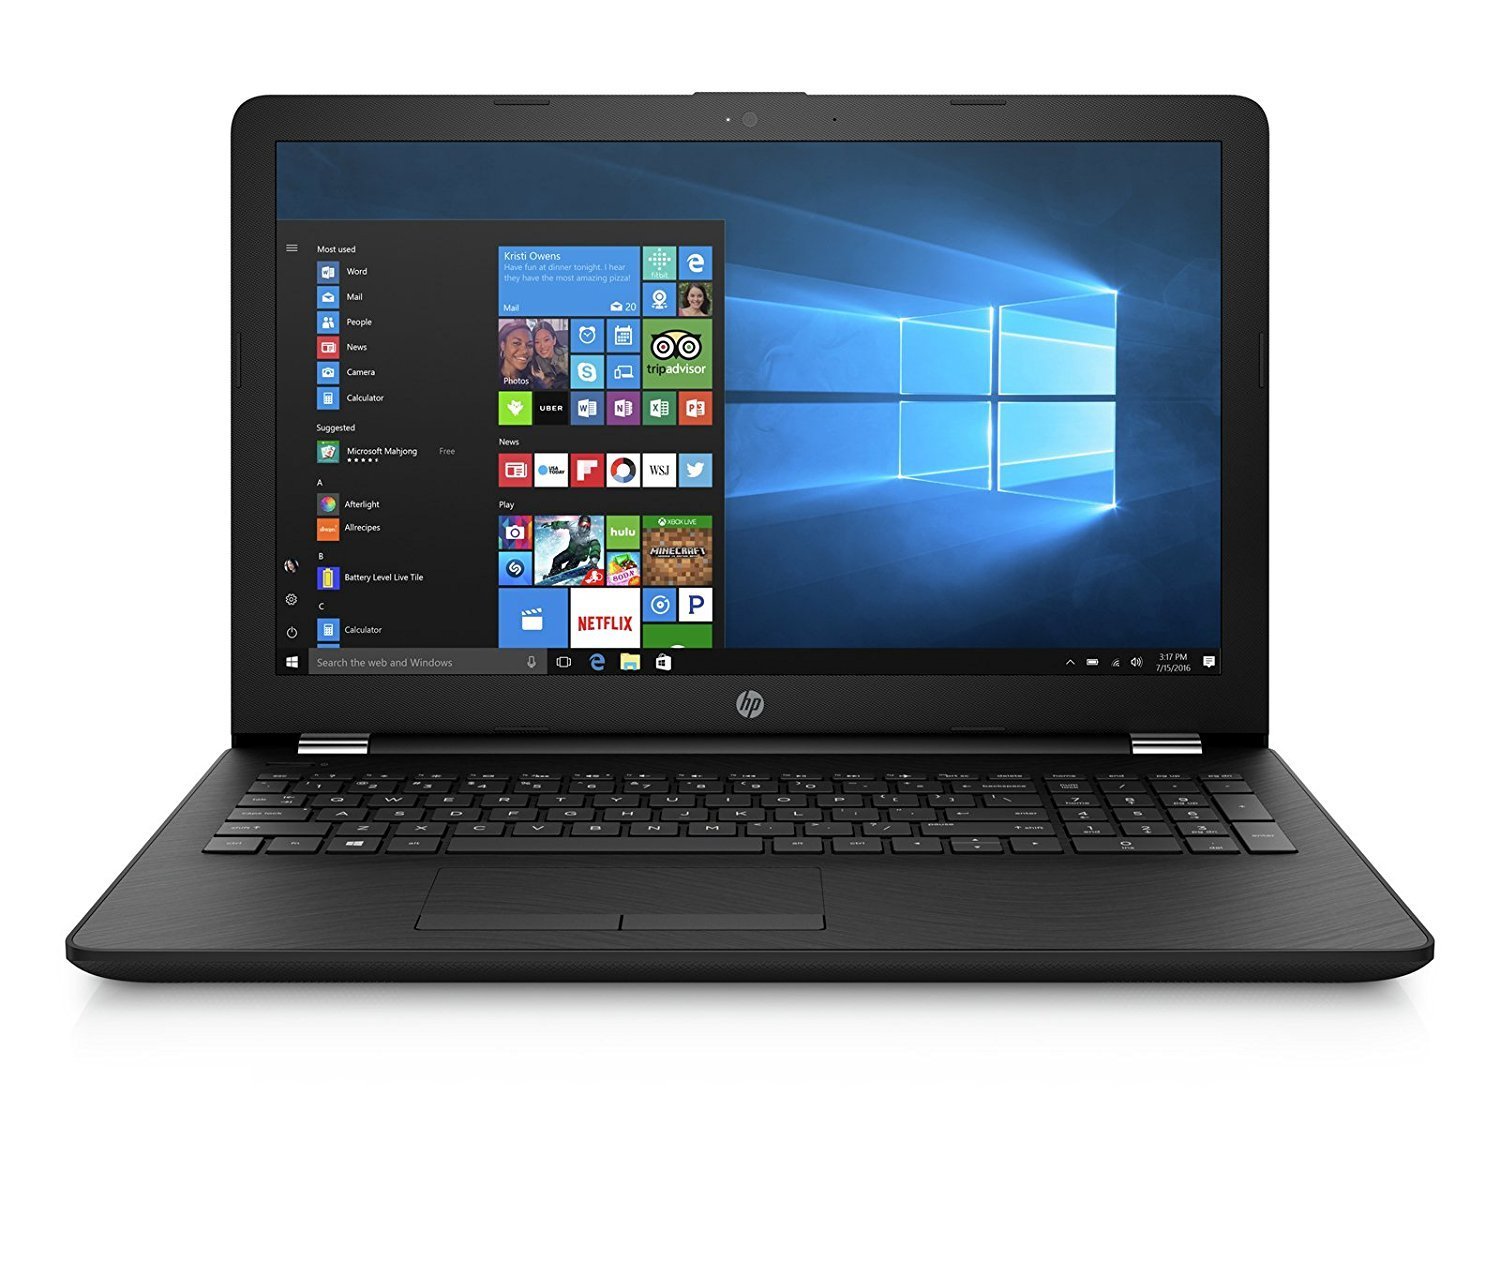 HP 15-bs618TU FHD Anti-Glare Display 15.6 inch Laptop (Intel i3-6006U/4GB RAM/1TB HDD/Intel HD Graphics/Win 10/MS Office Home and Student 2016) Sparkling Black